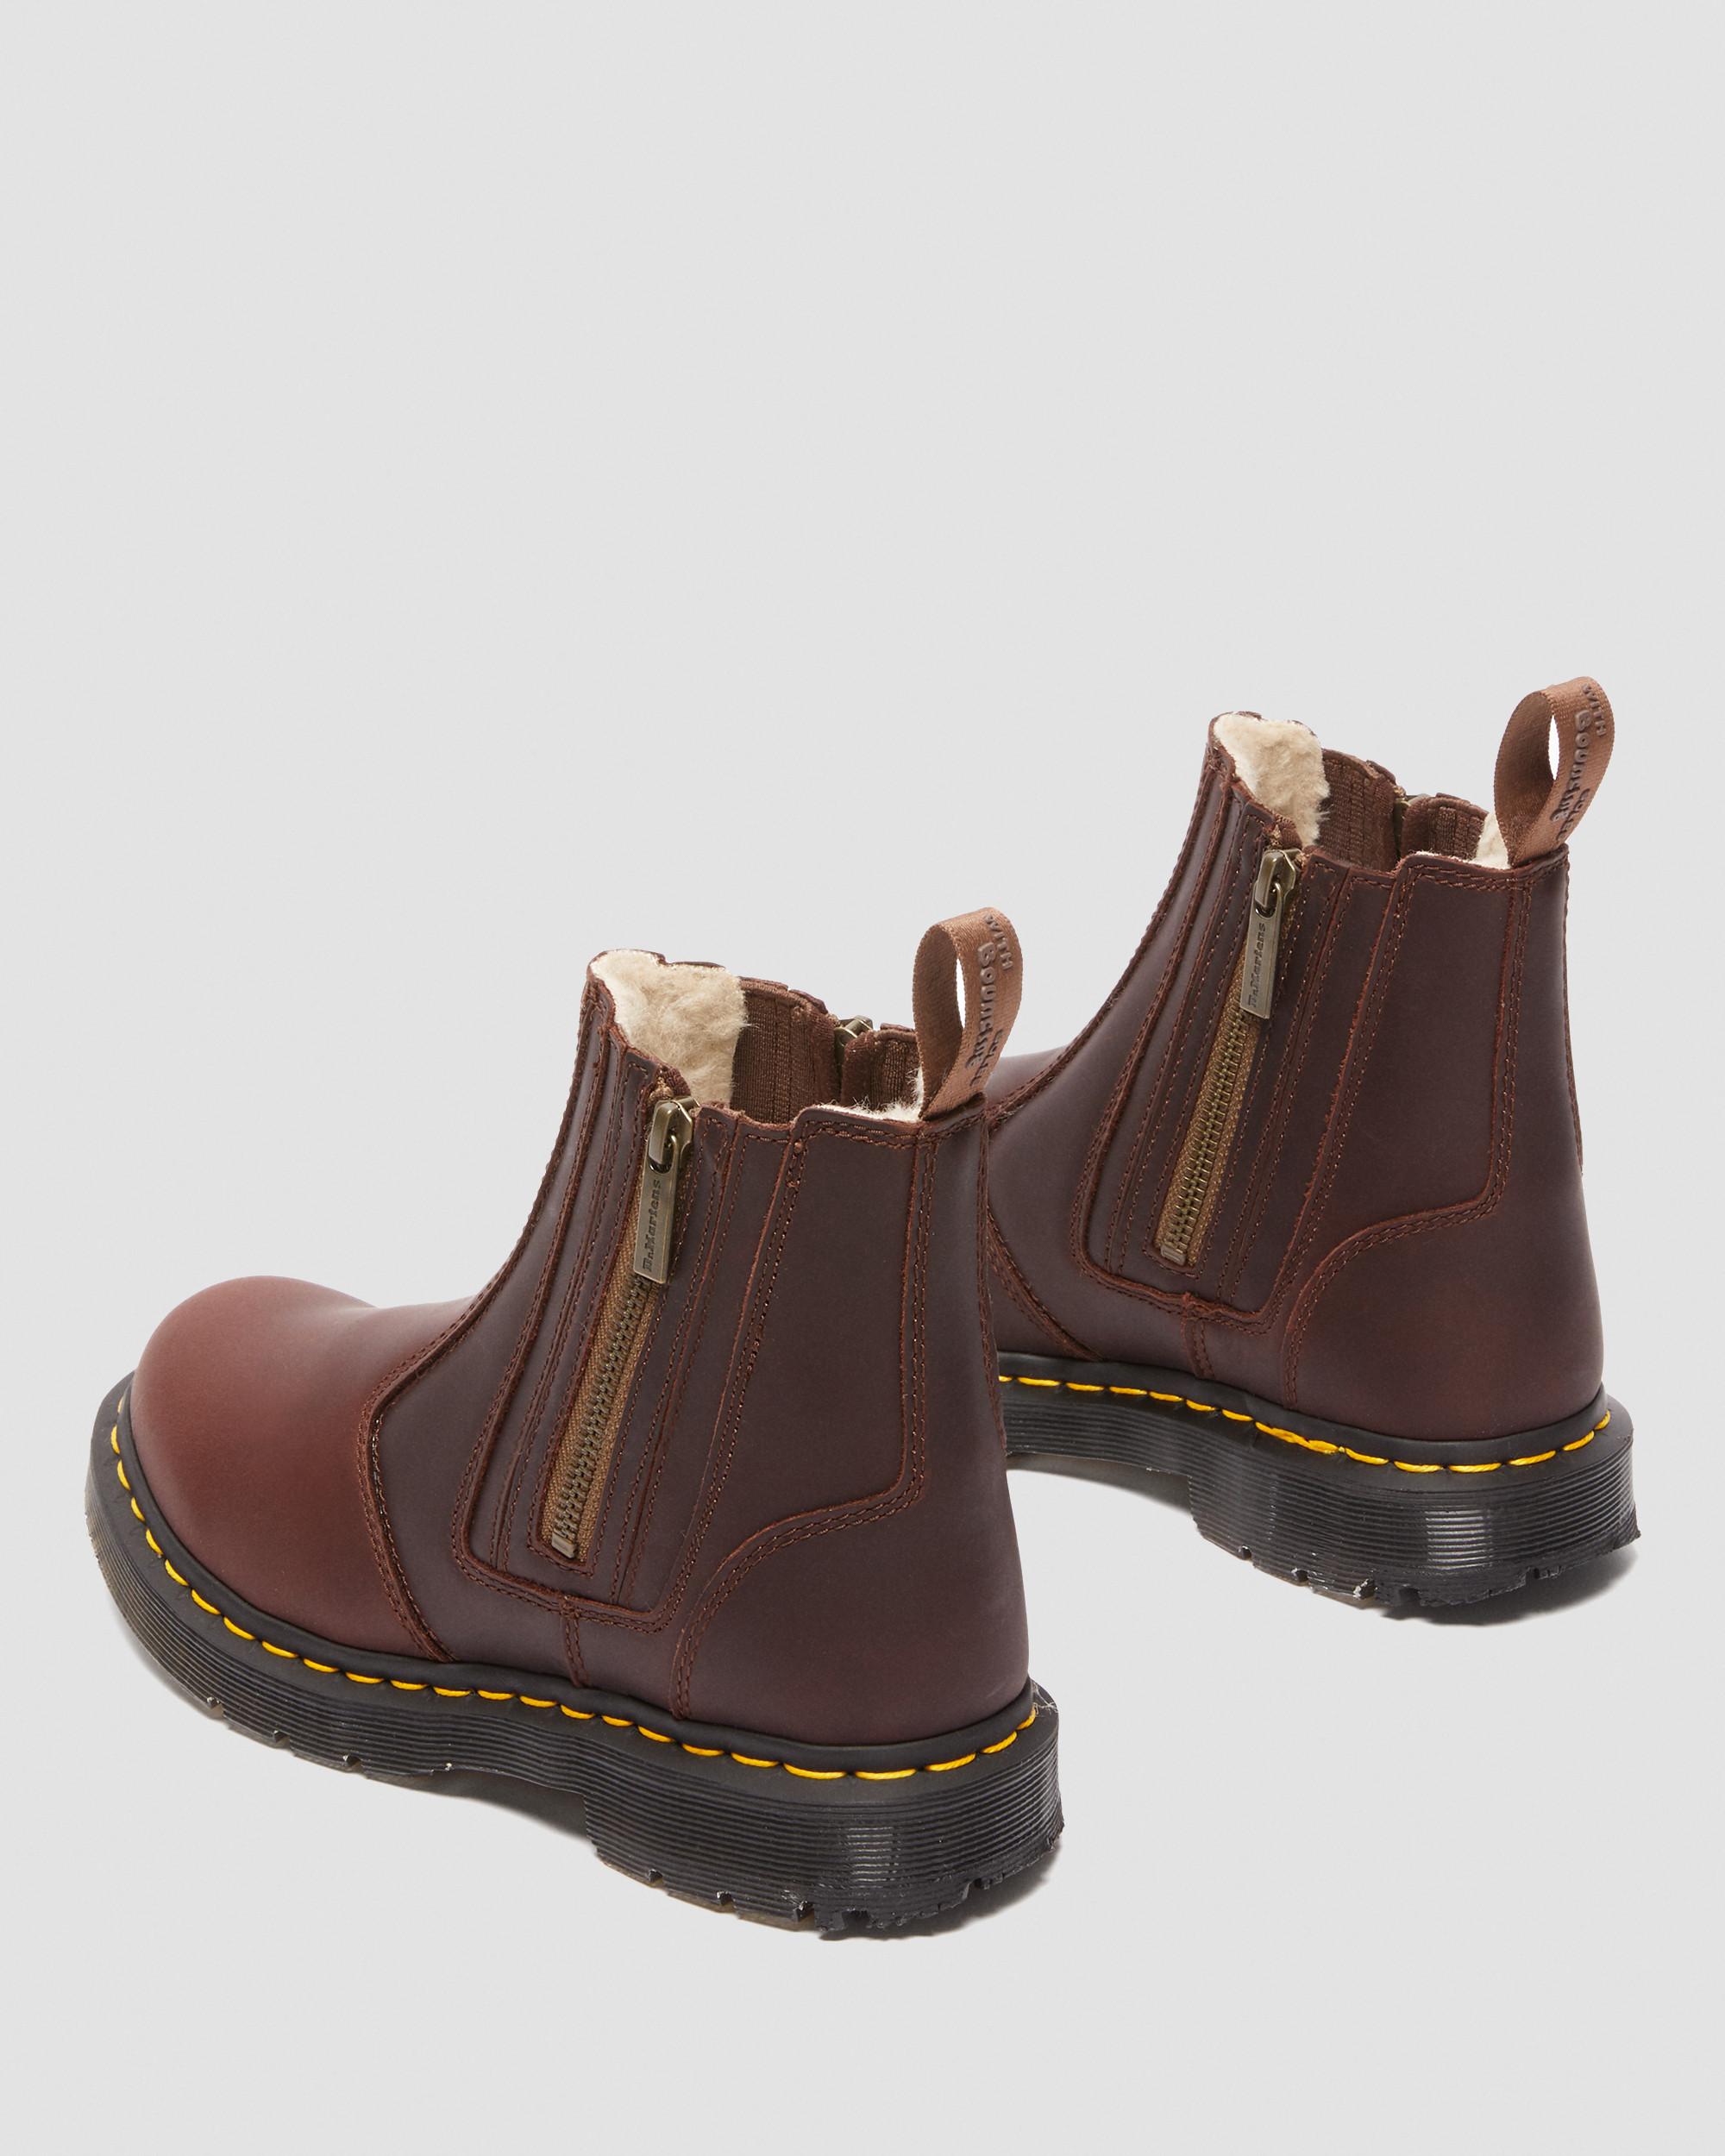 2976 Alyson DM's Wintergrip Chelsea Boots in Brown